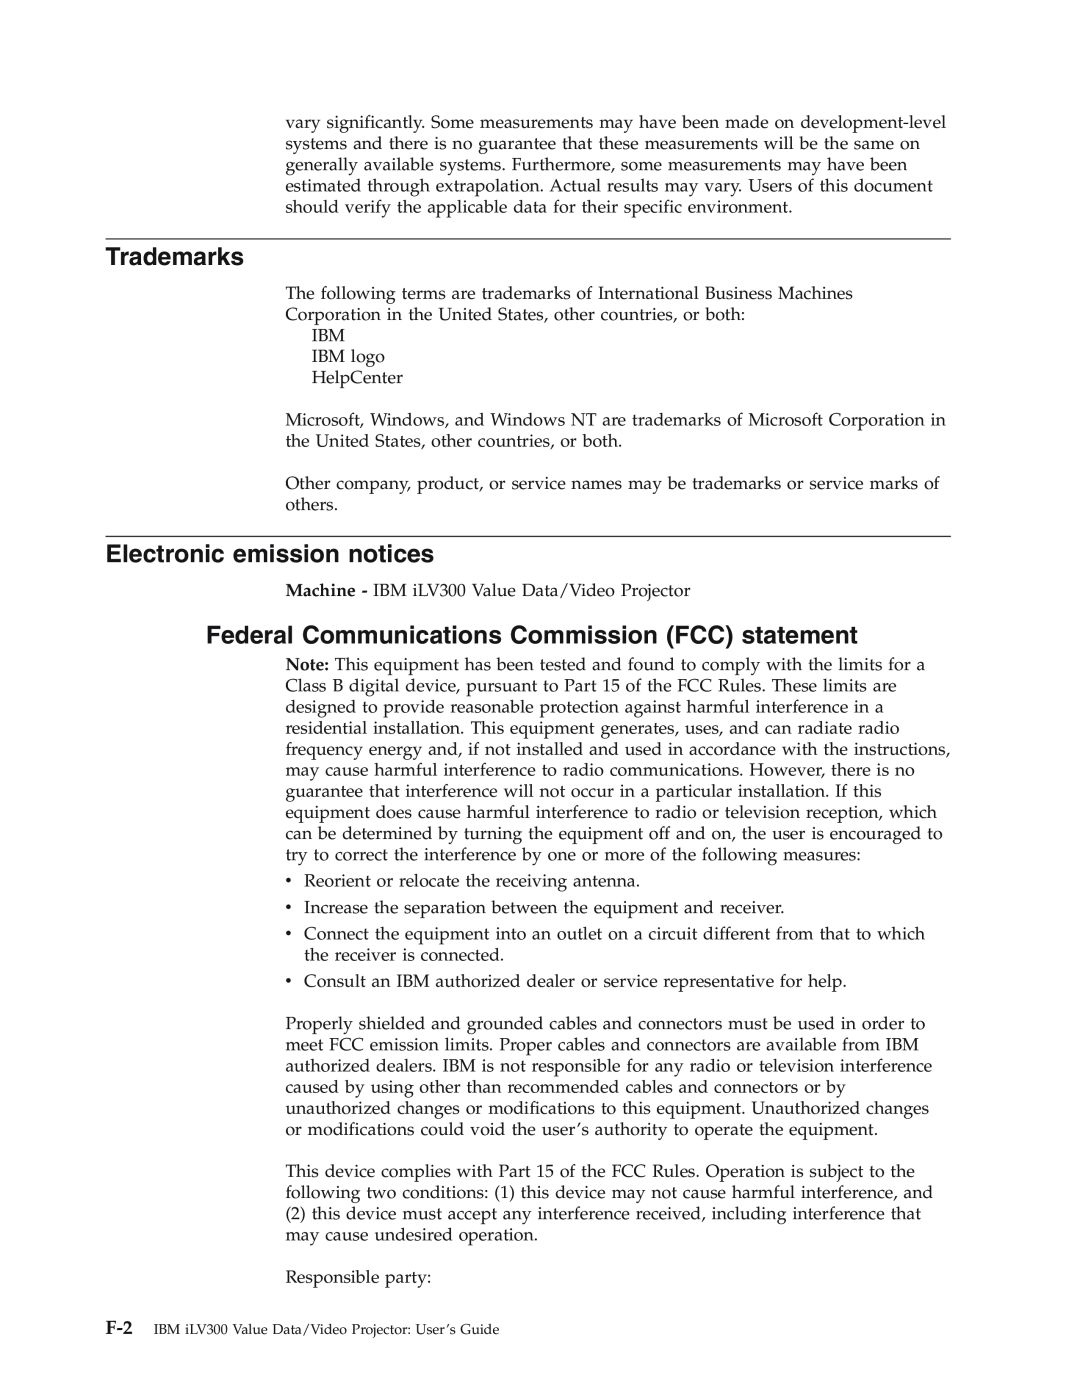 IBM Partner Pavilion iLV300 manual Trademarks, Electronic emission notices, Federal Communications Commission FCC statement 